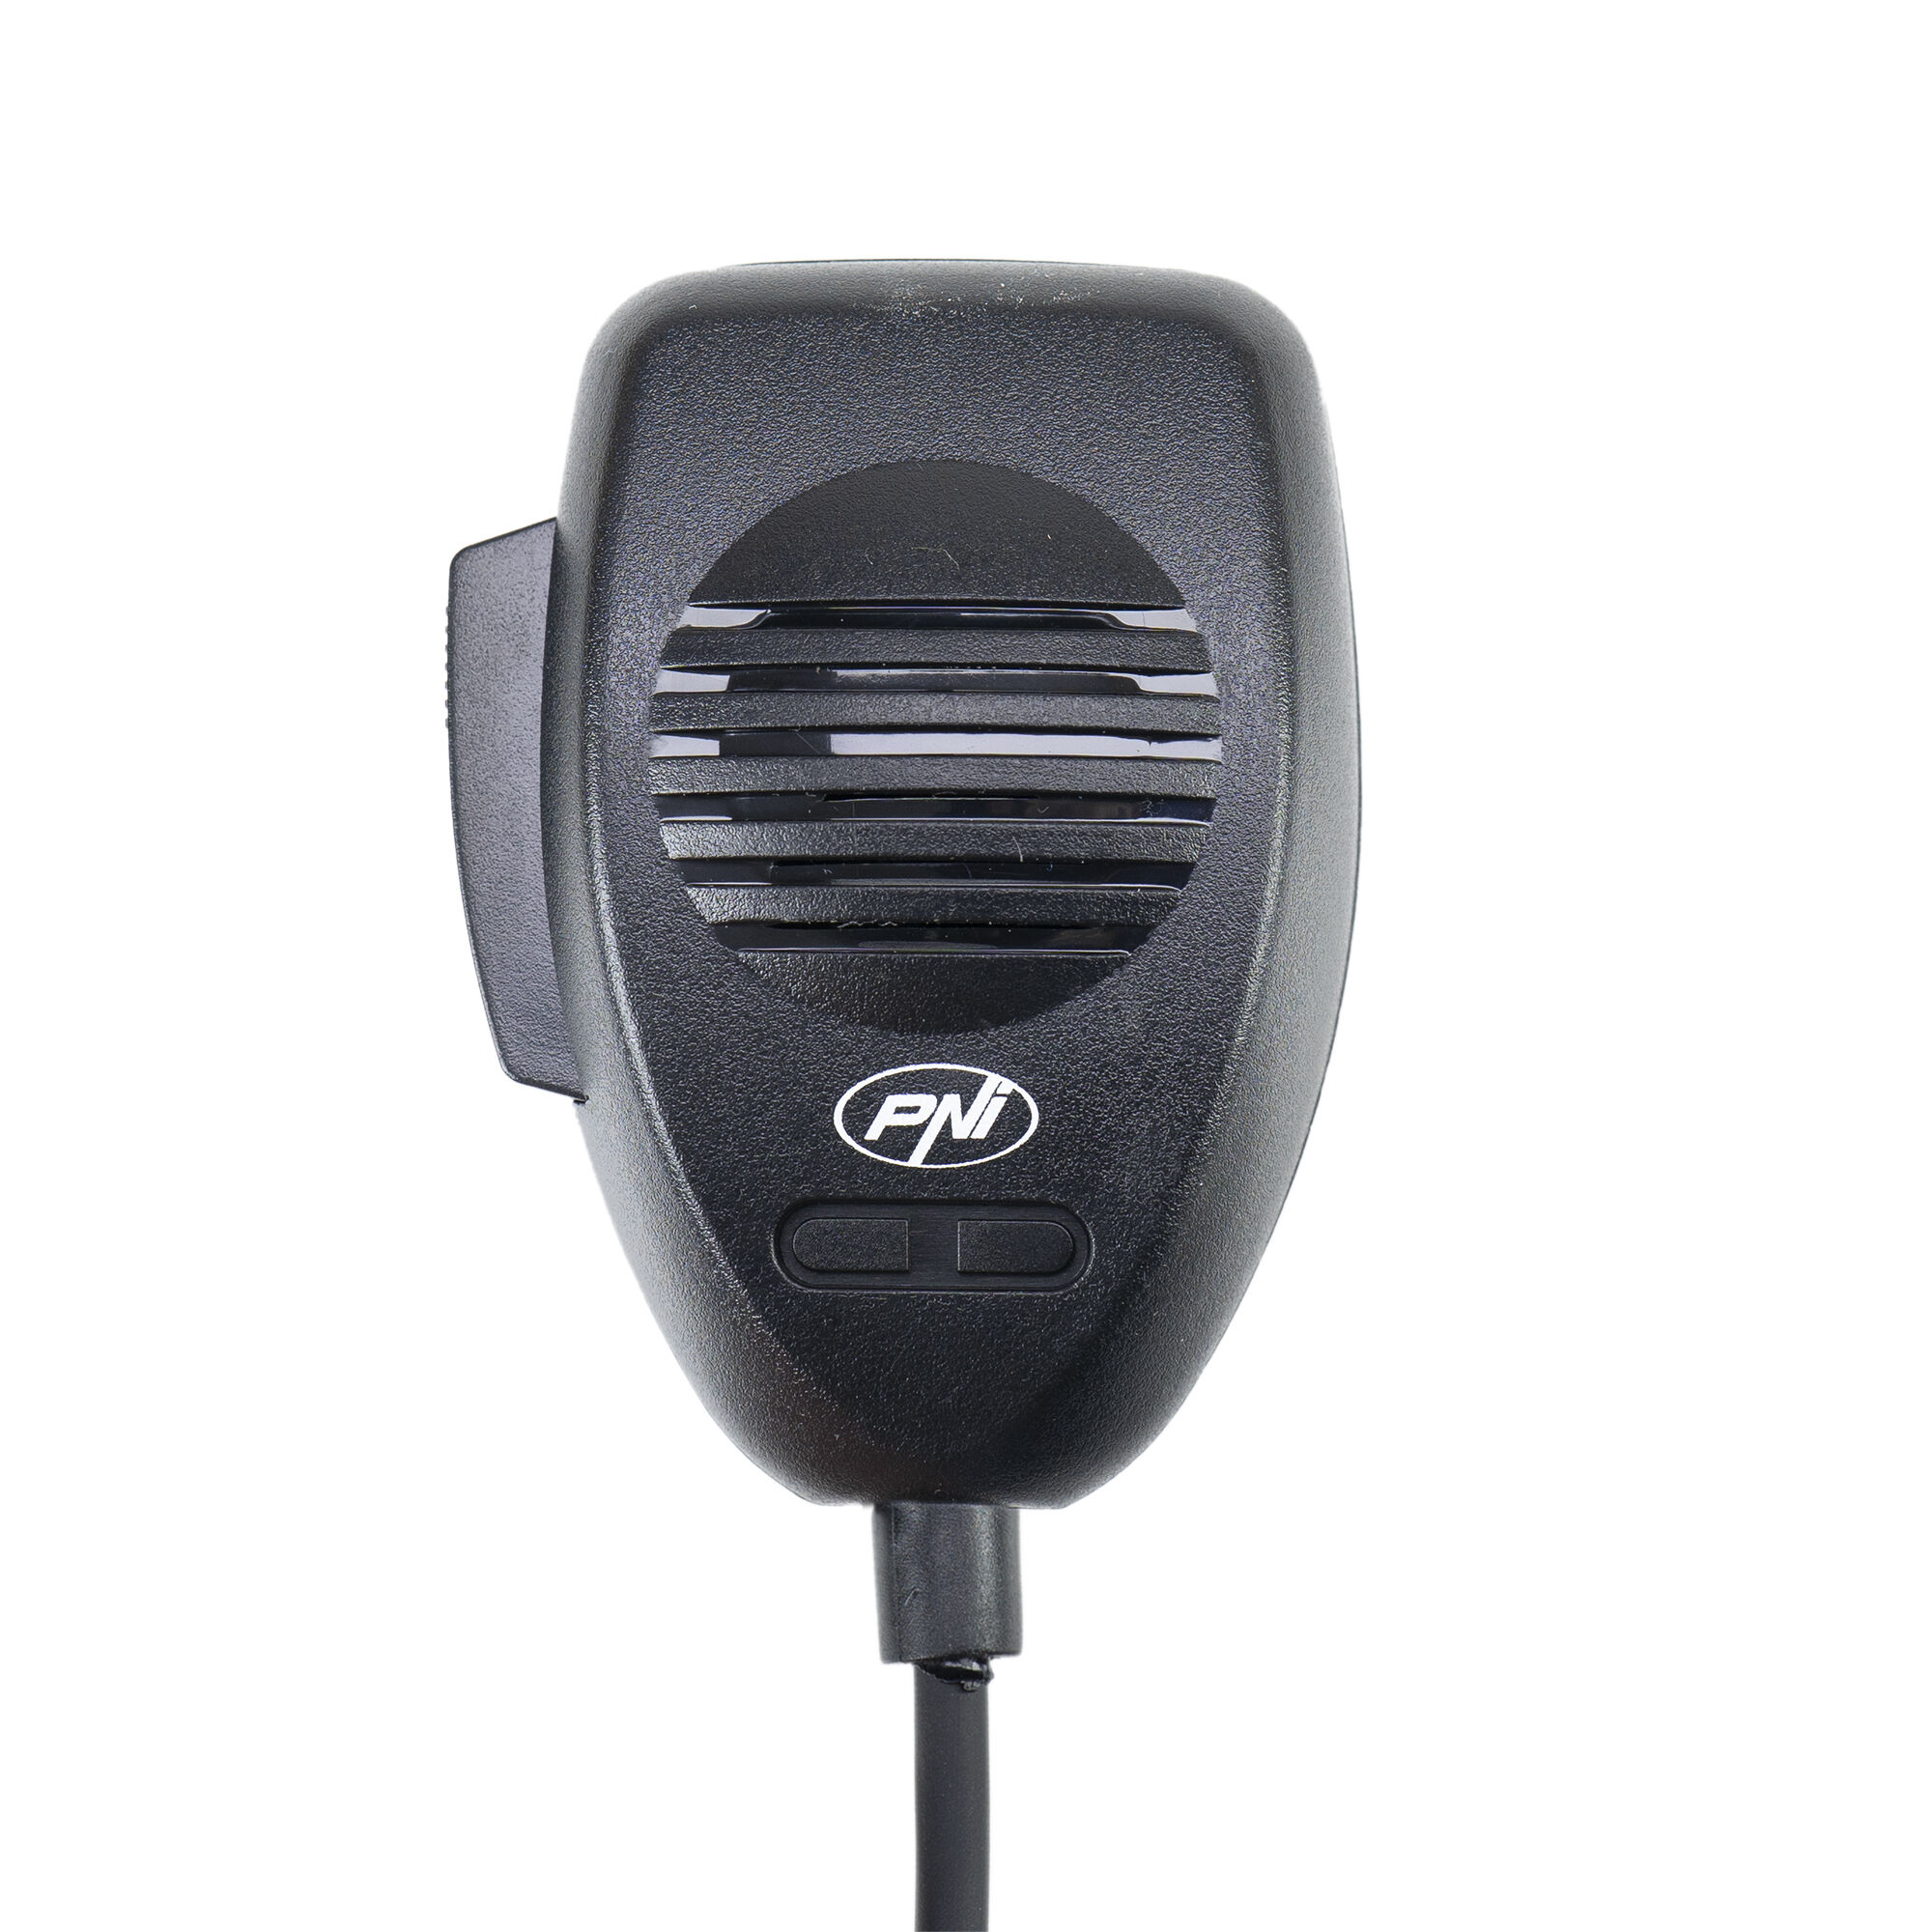 PNI CDS04 4-poliges Kondensatormikrofon für CB-Funkgeräte - Bild 1